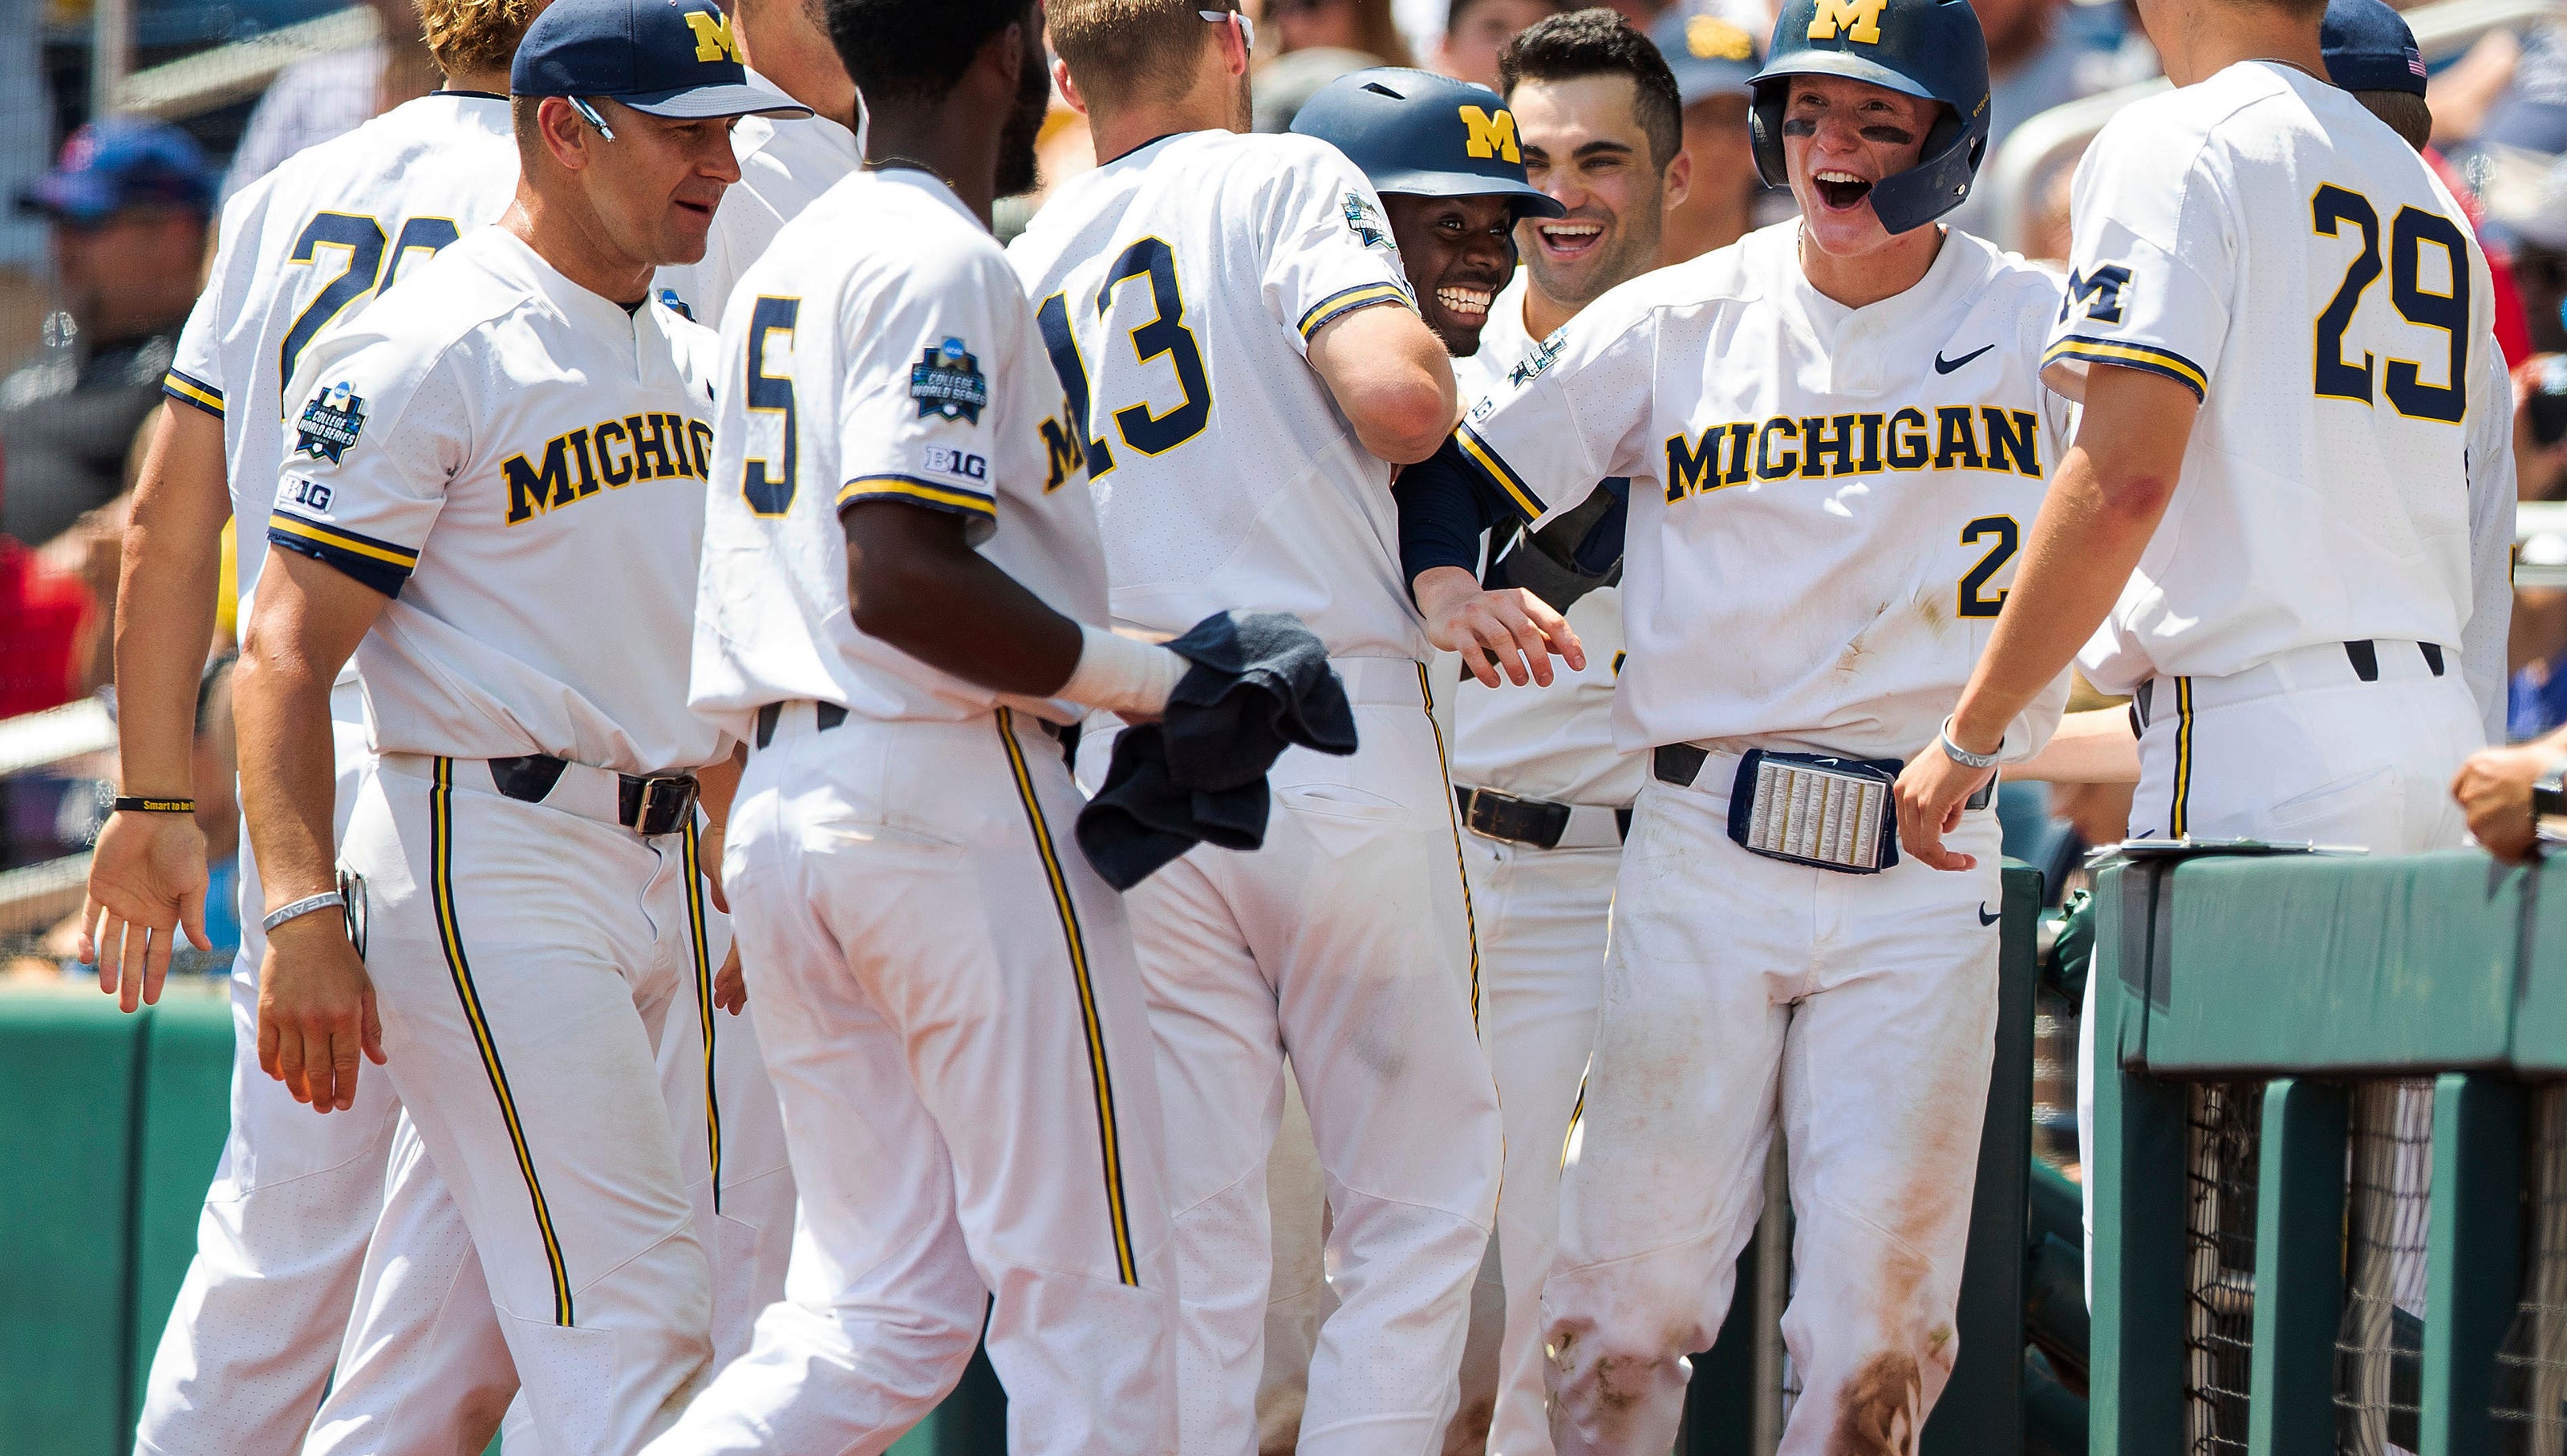 Michigan baseball honors past during College World Series run